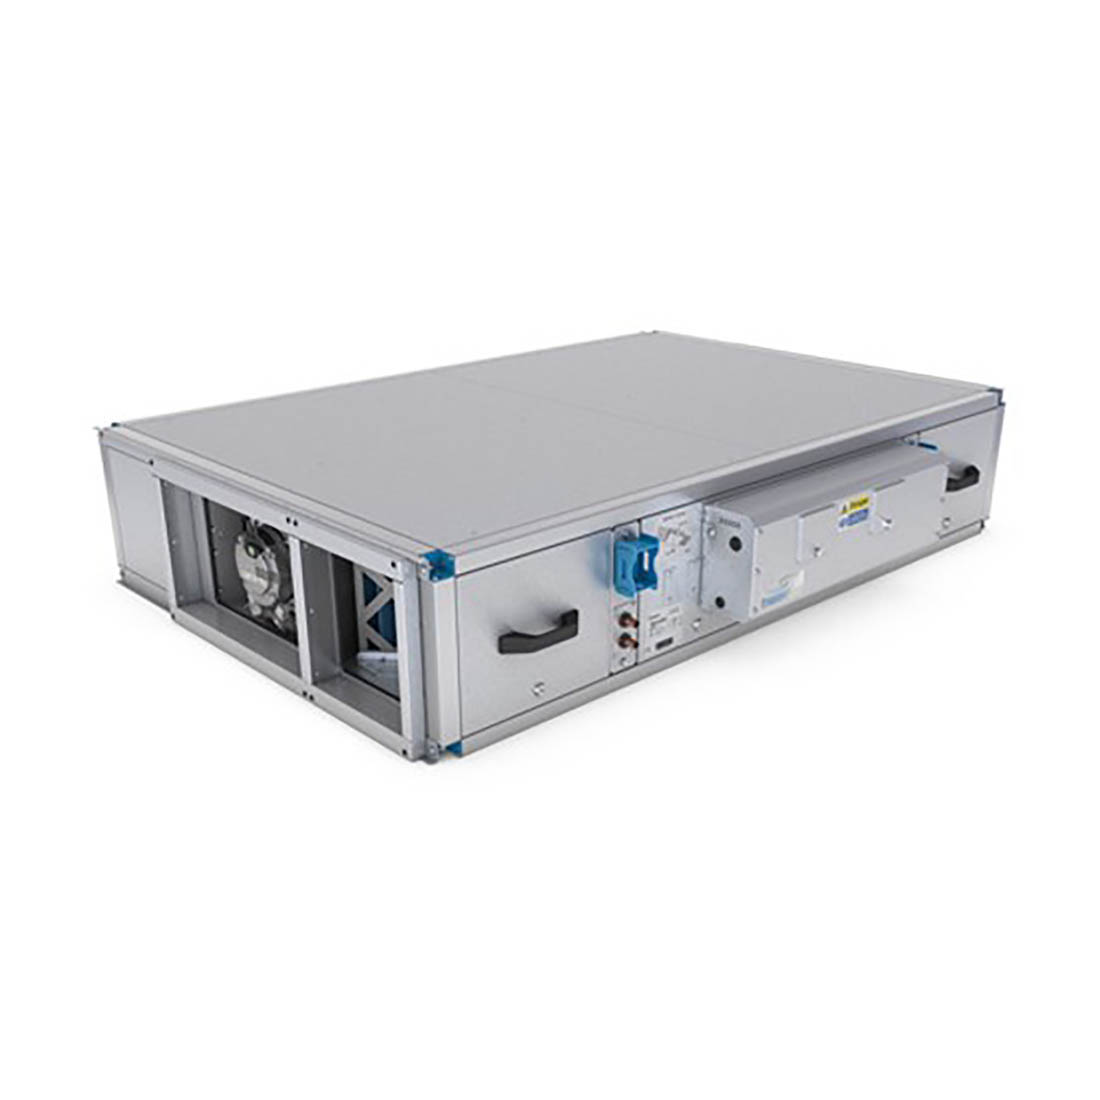 Nuaire Xboxer XBC-15 Commercial Heat Exchange Unit - (Price Varies Upon Appraisal)